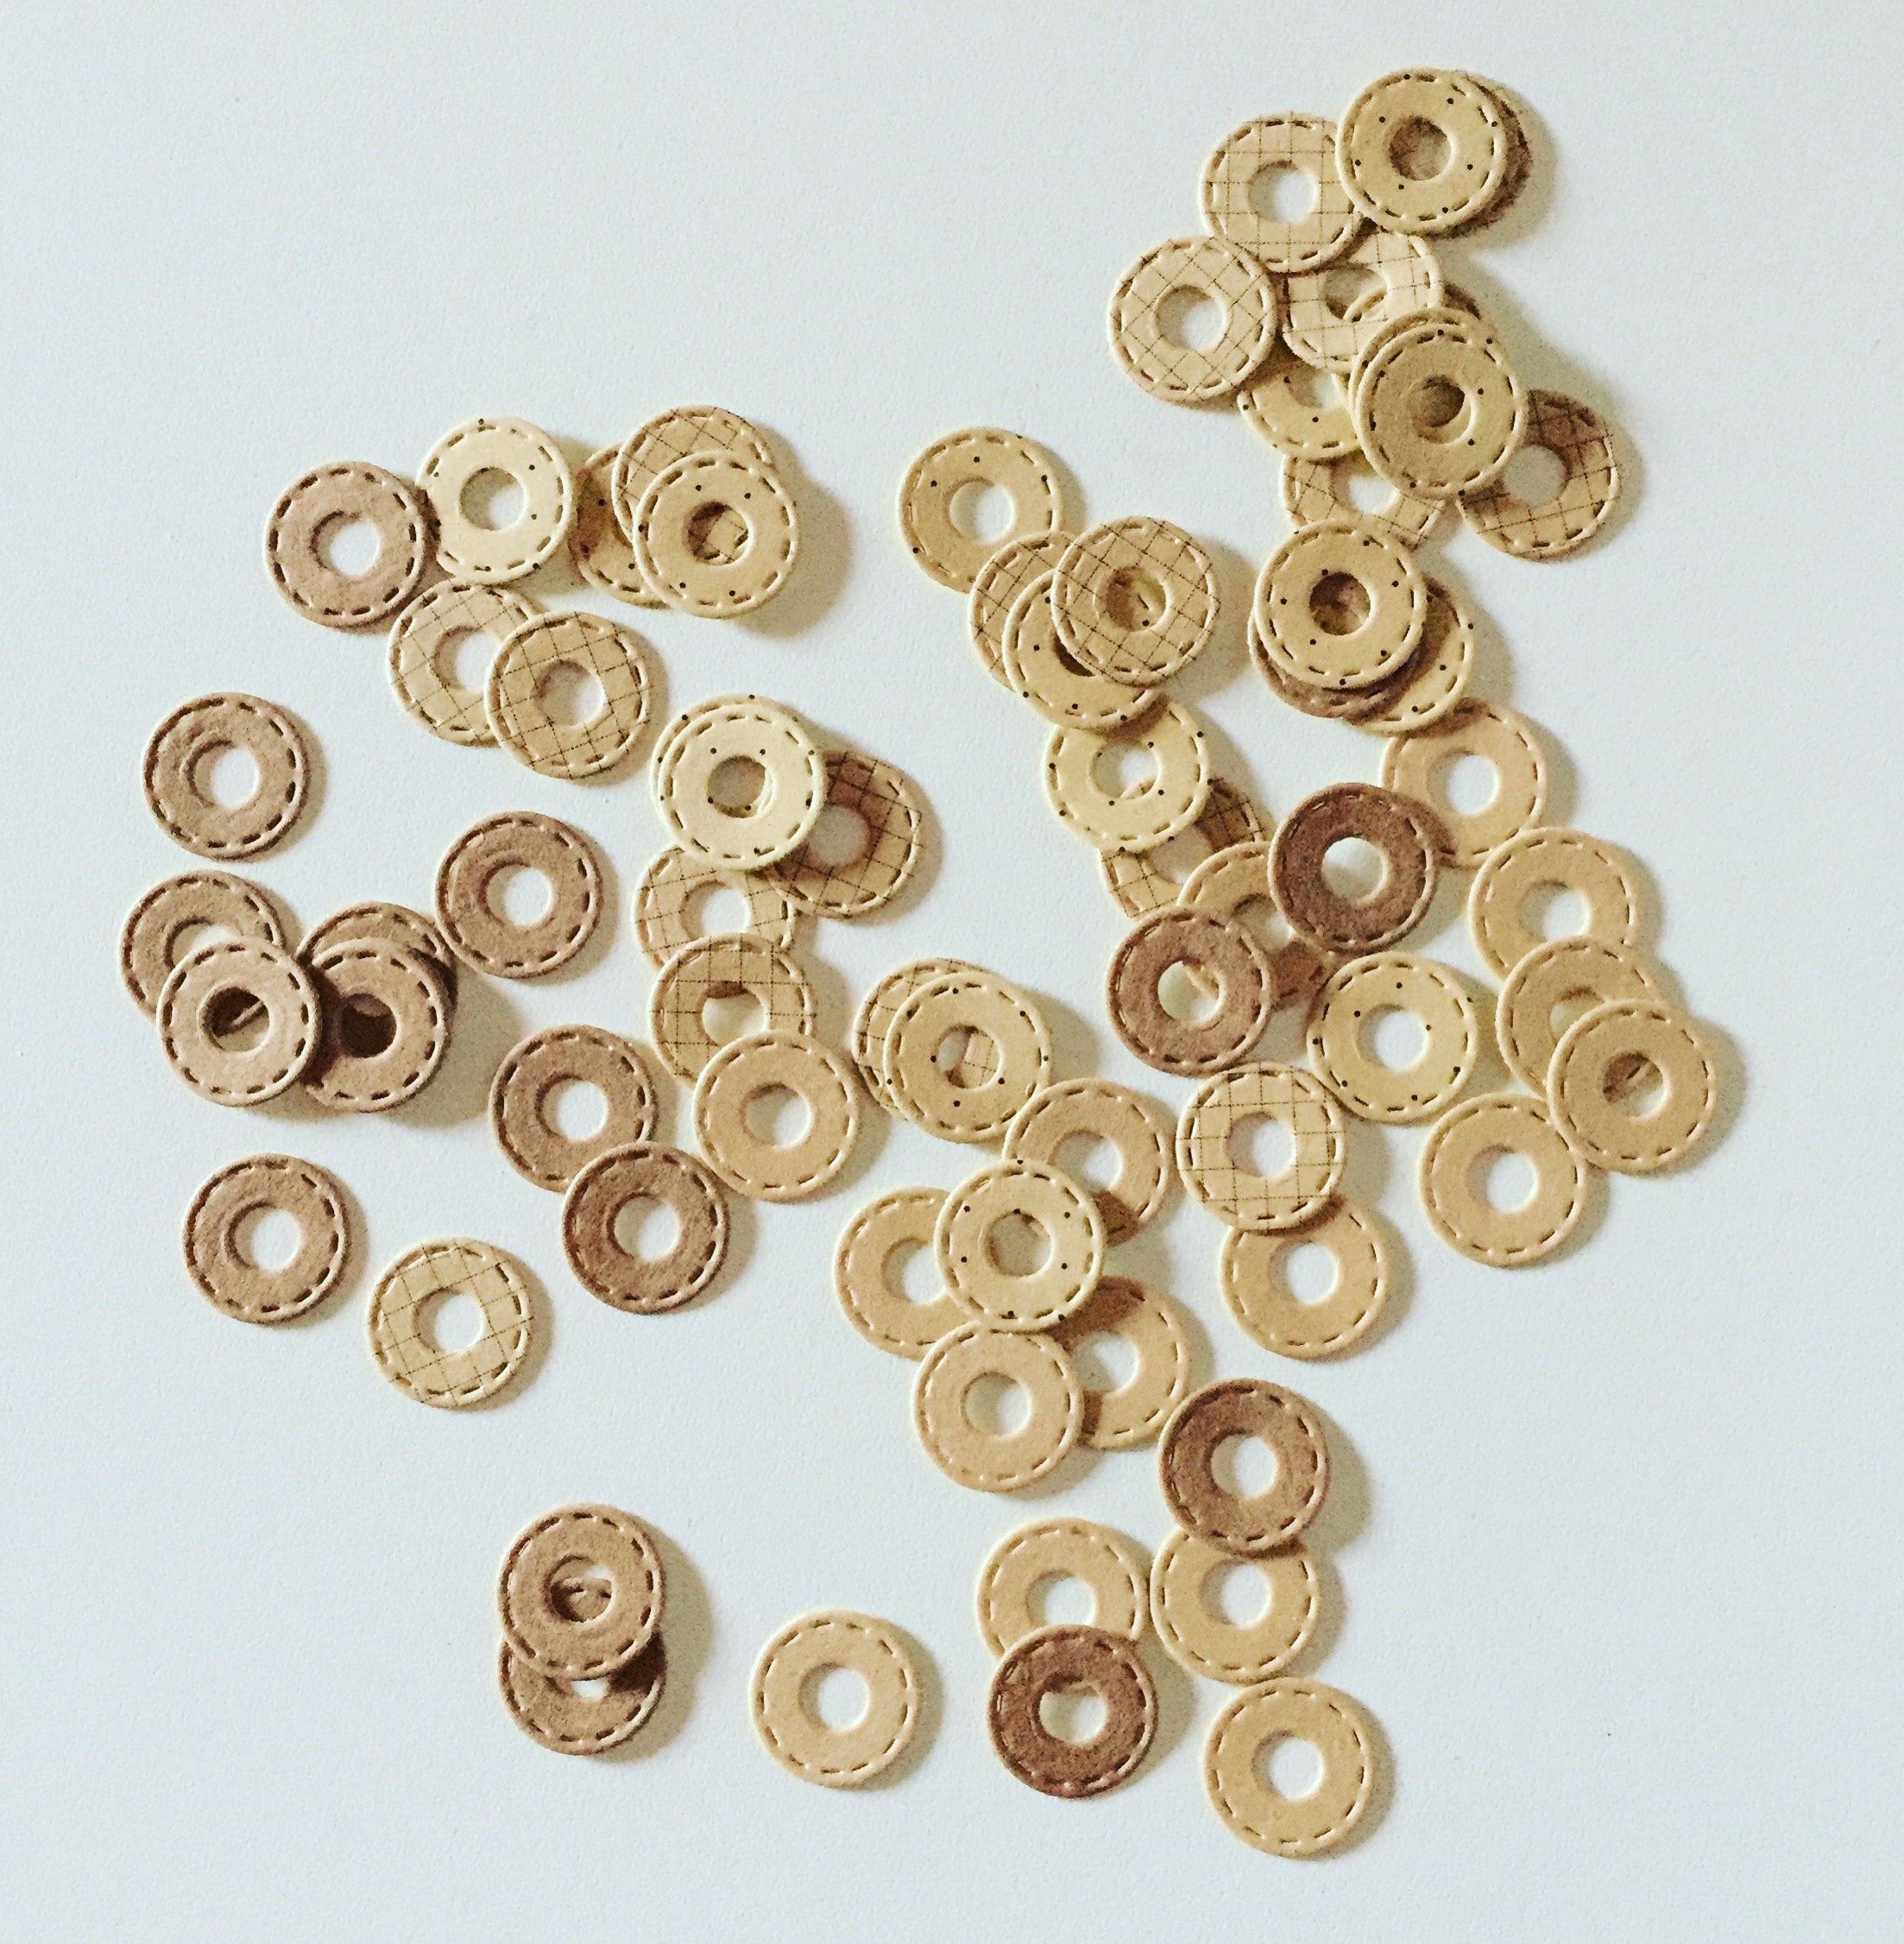 Metallic Gold Reinforcement Stickers - Gold Planner Stickers - Gold  Reinforcement Holes